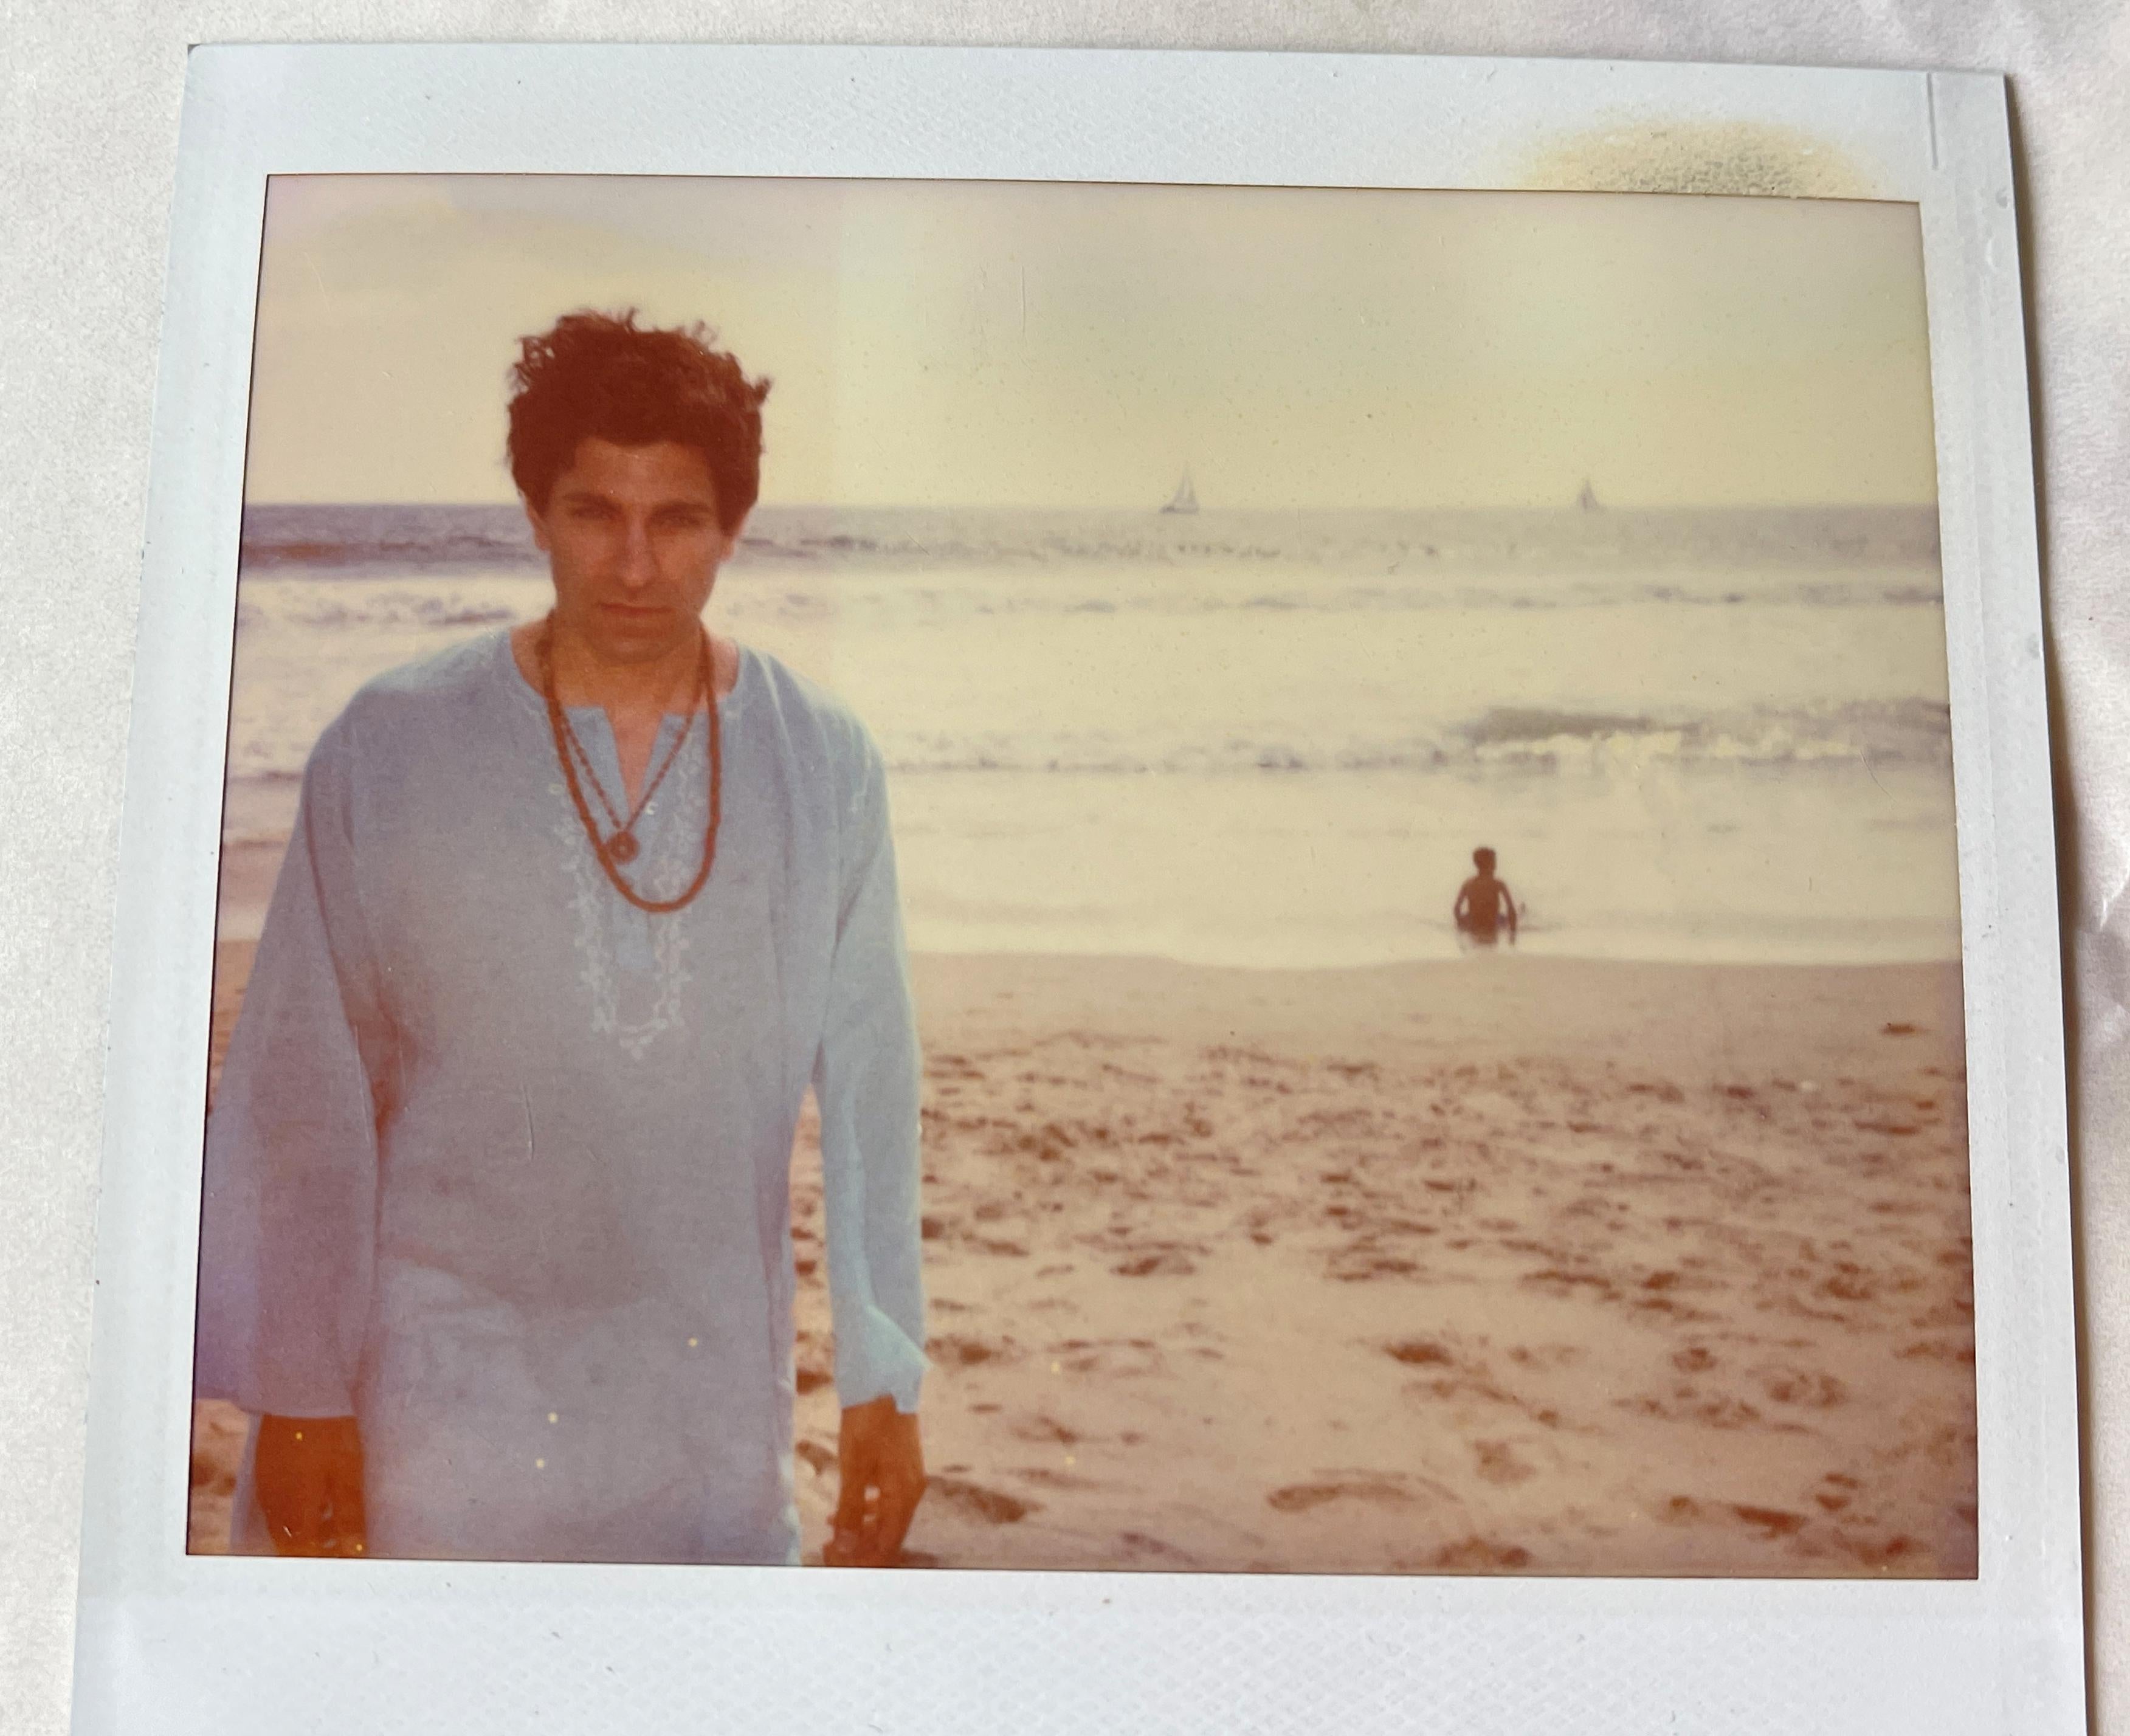 The Prince (29 Palms, CA) - Original Polaroid Unique Piece - Photograph by Stefanie Schneider